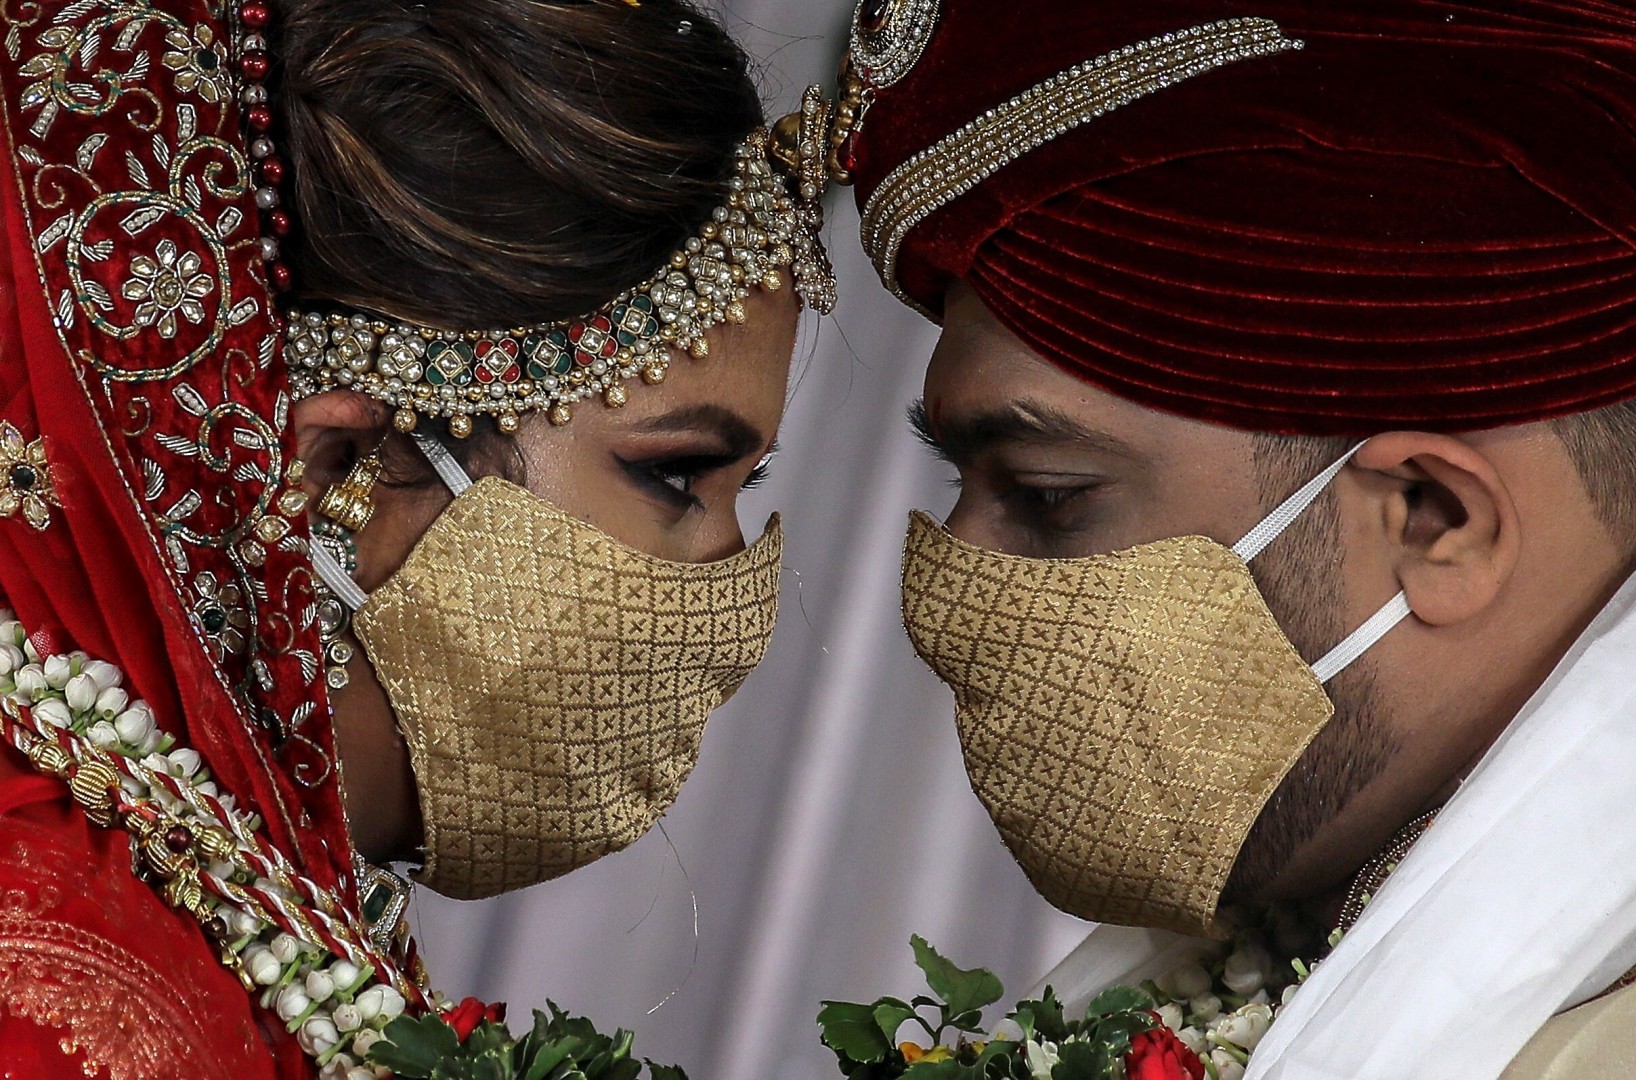 big fat indian weddings: coronavirus pandemic's latest casualty? | south china morning post